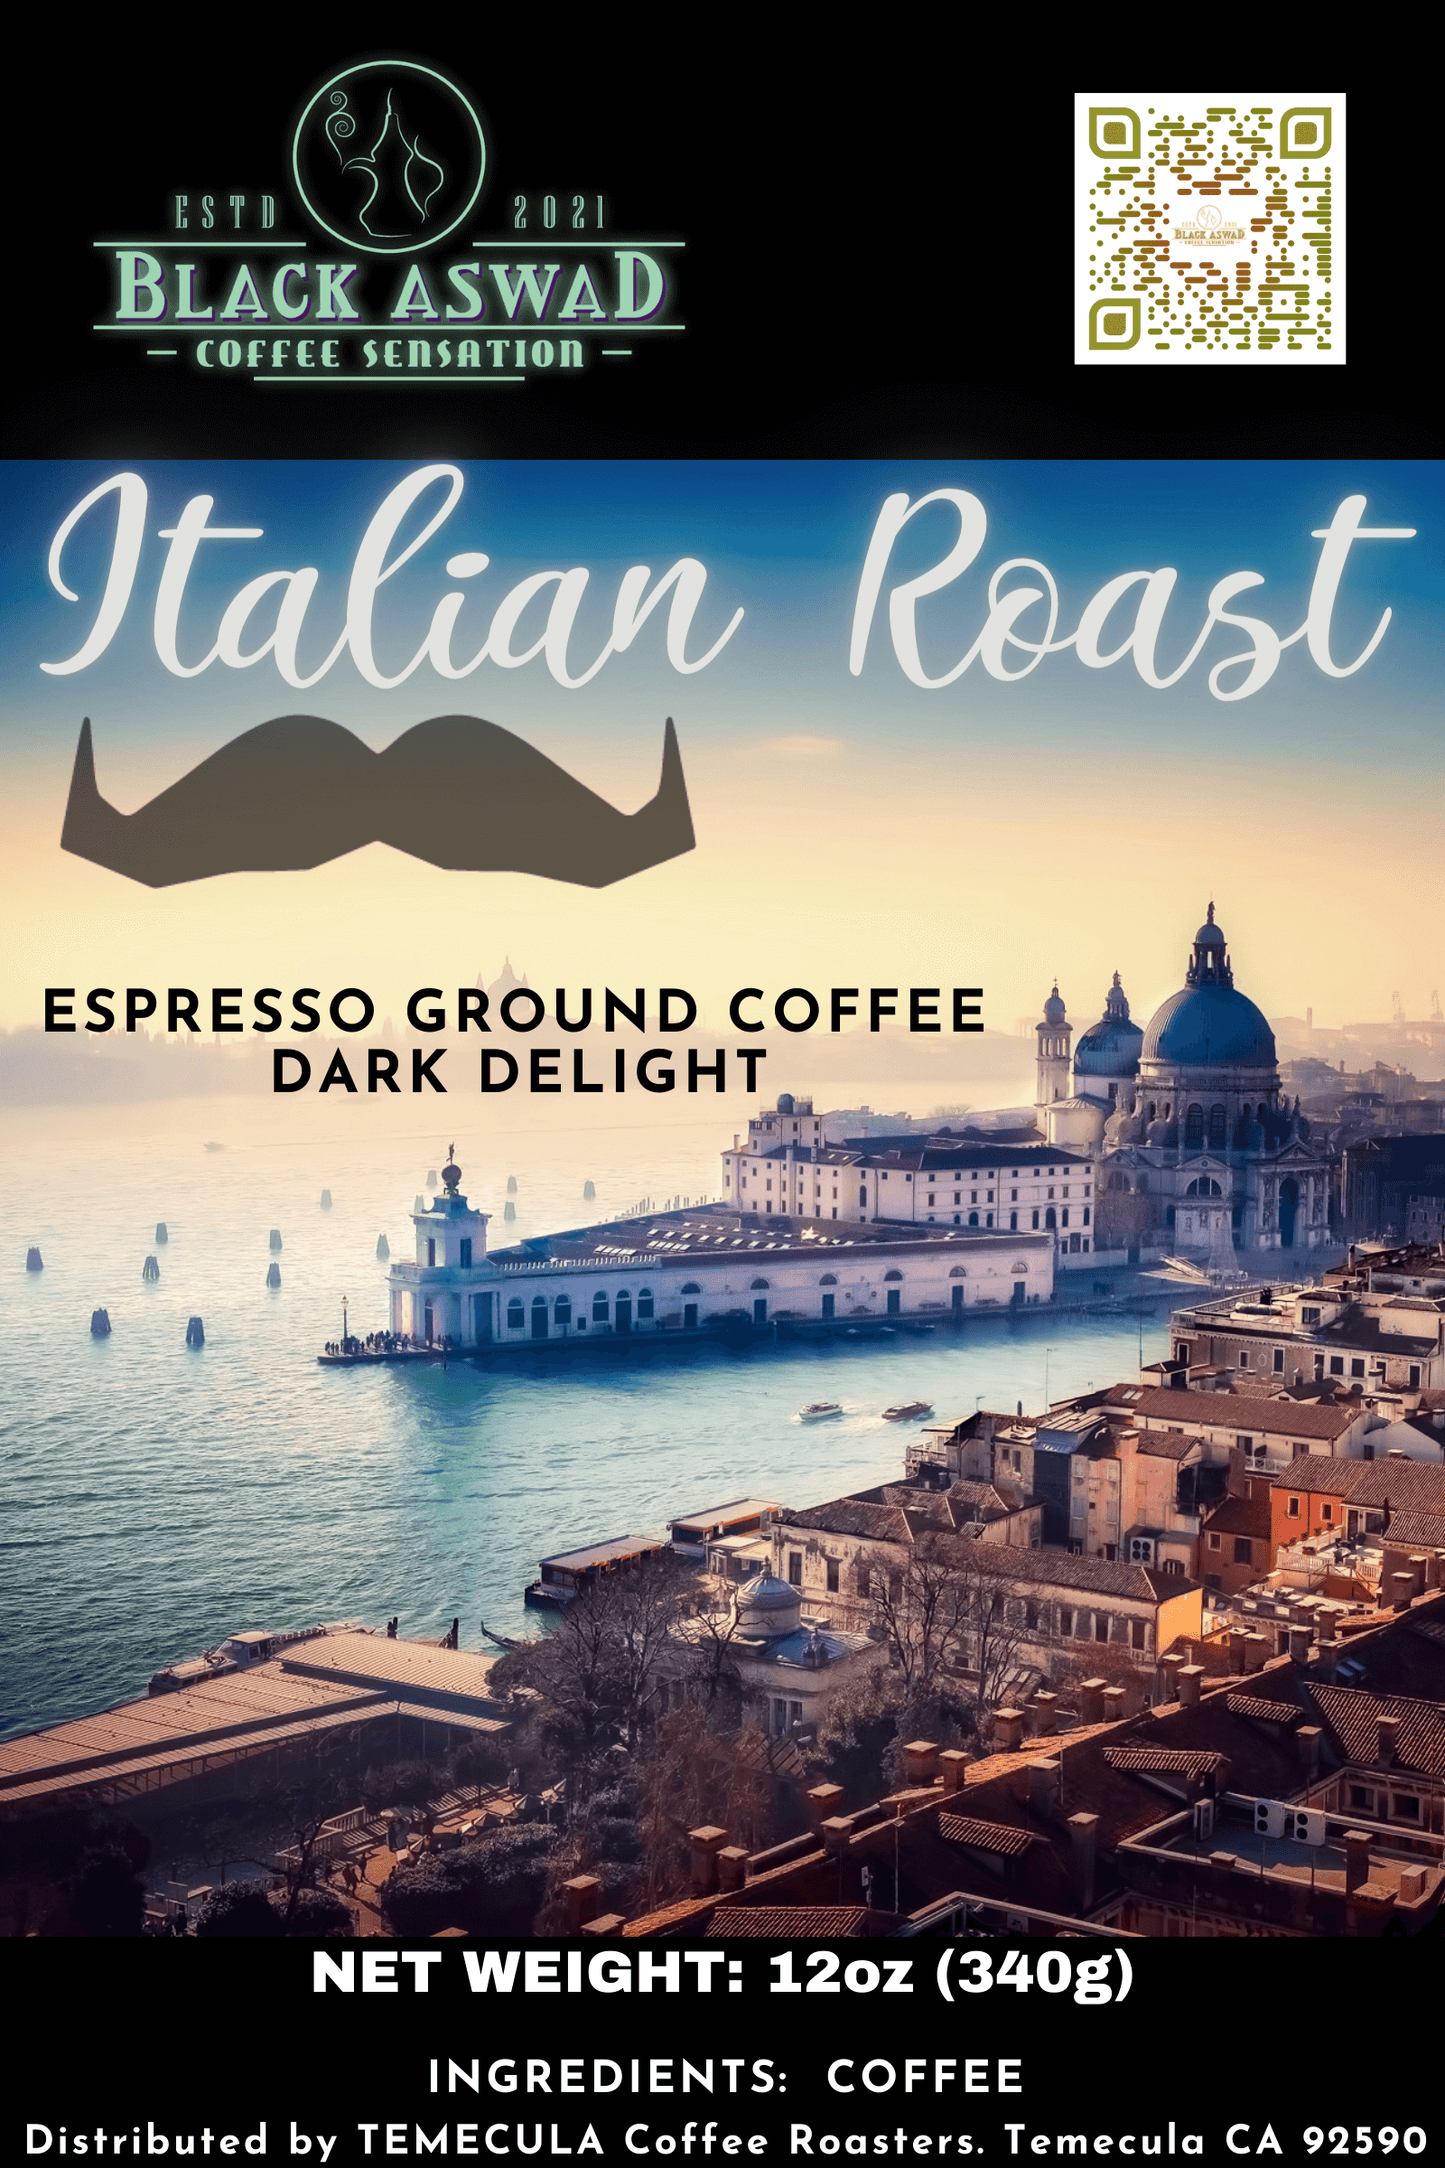 Exquisite Italian Roast Coffee Beans